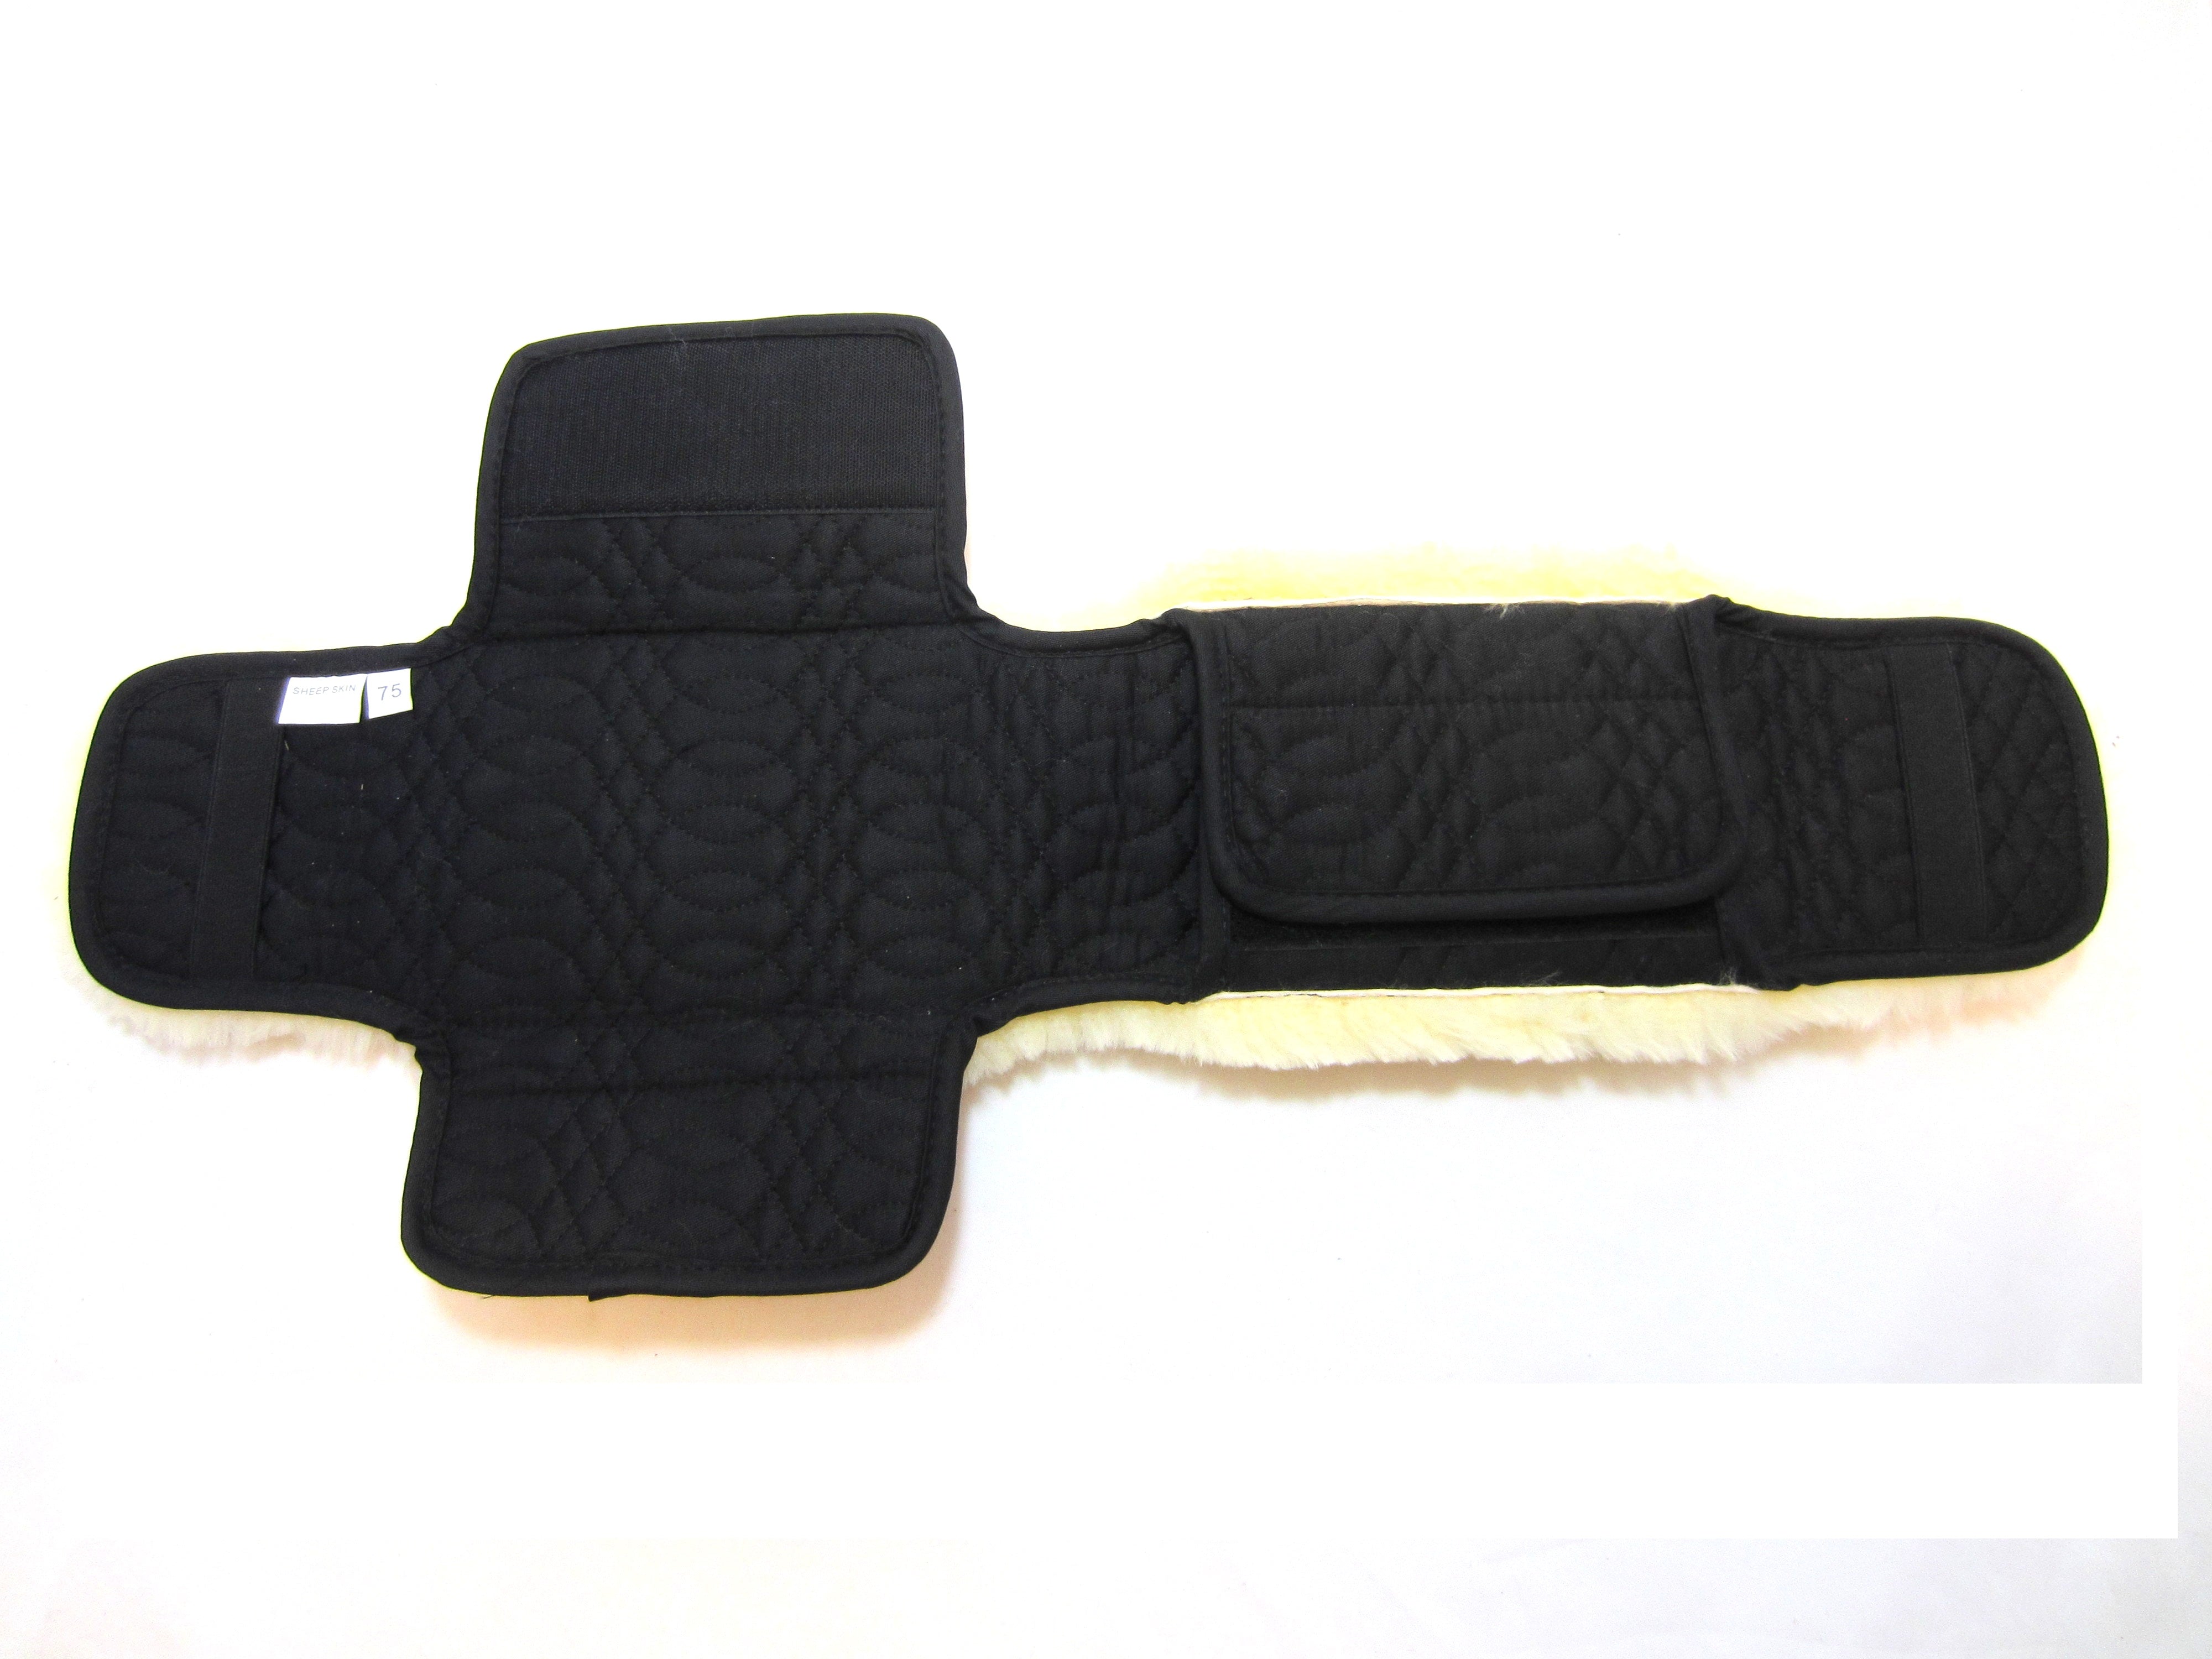 Soft lambskin belt protector straight - 5 sizes